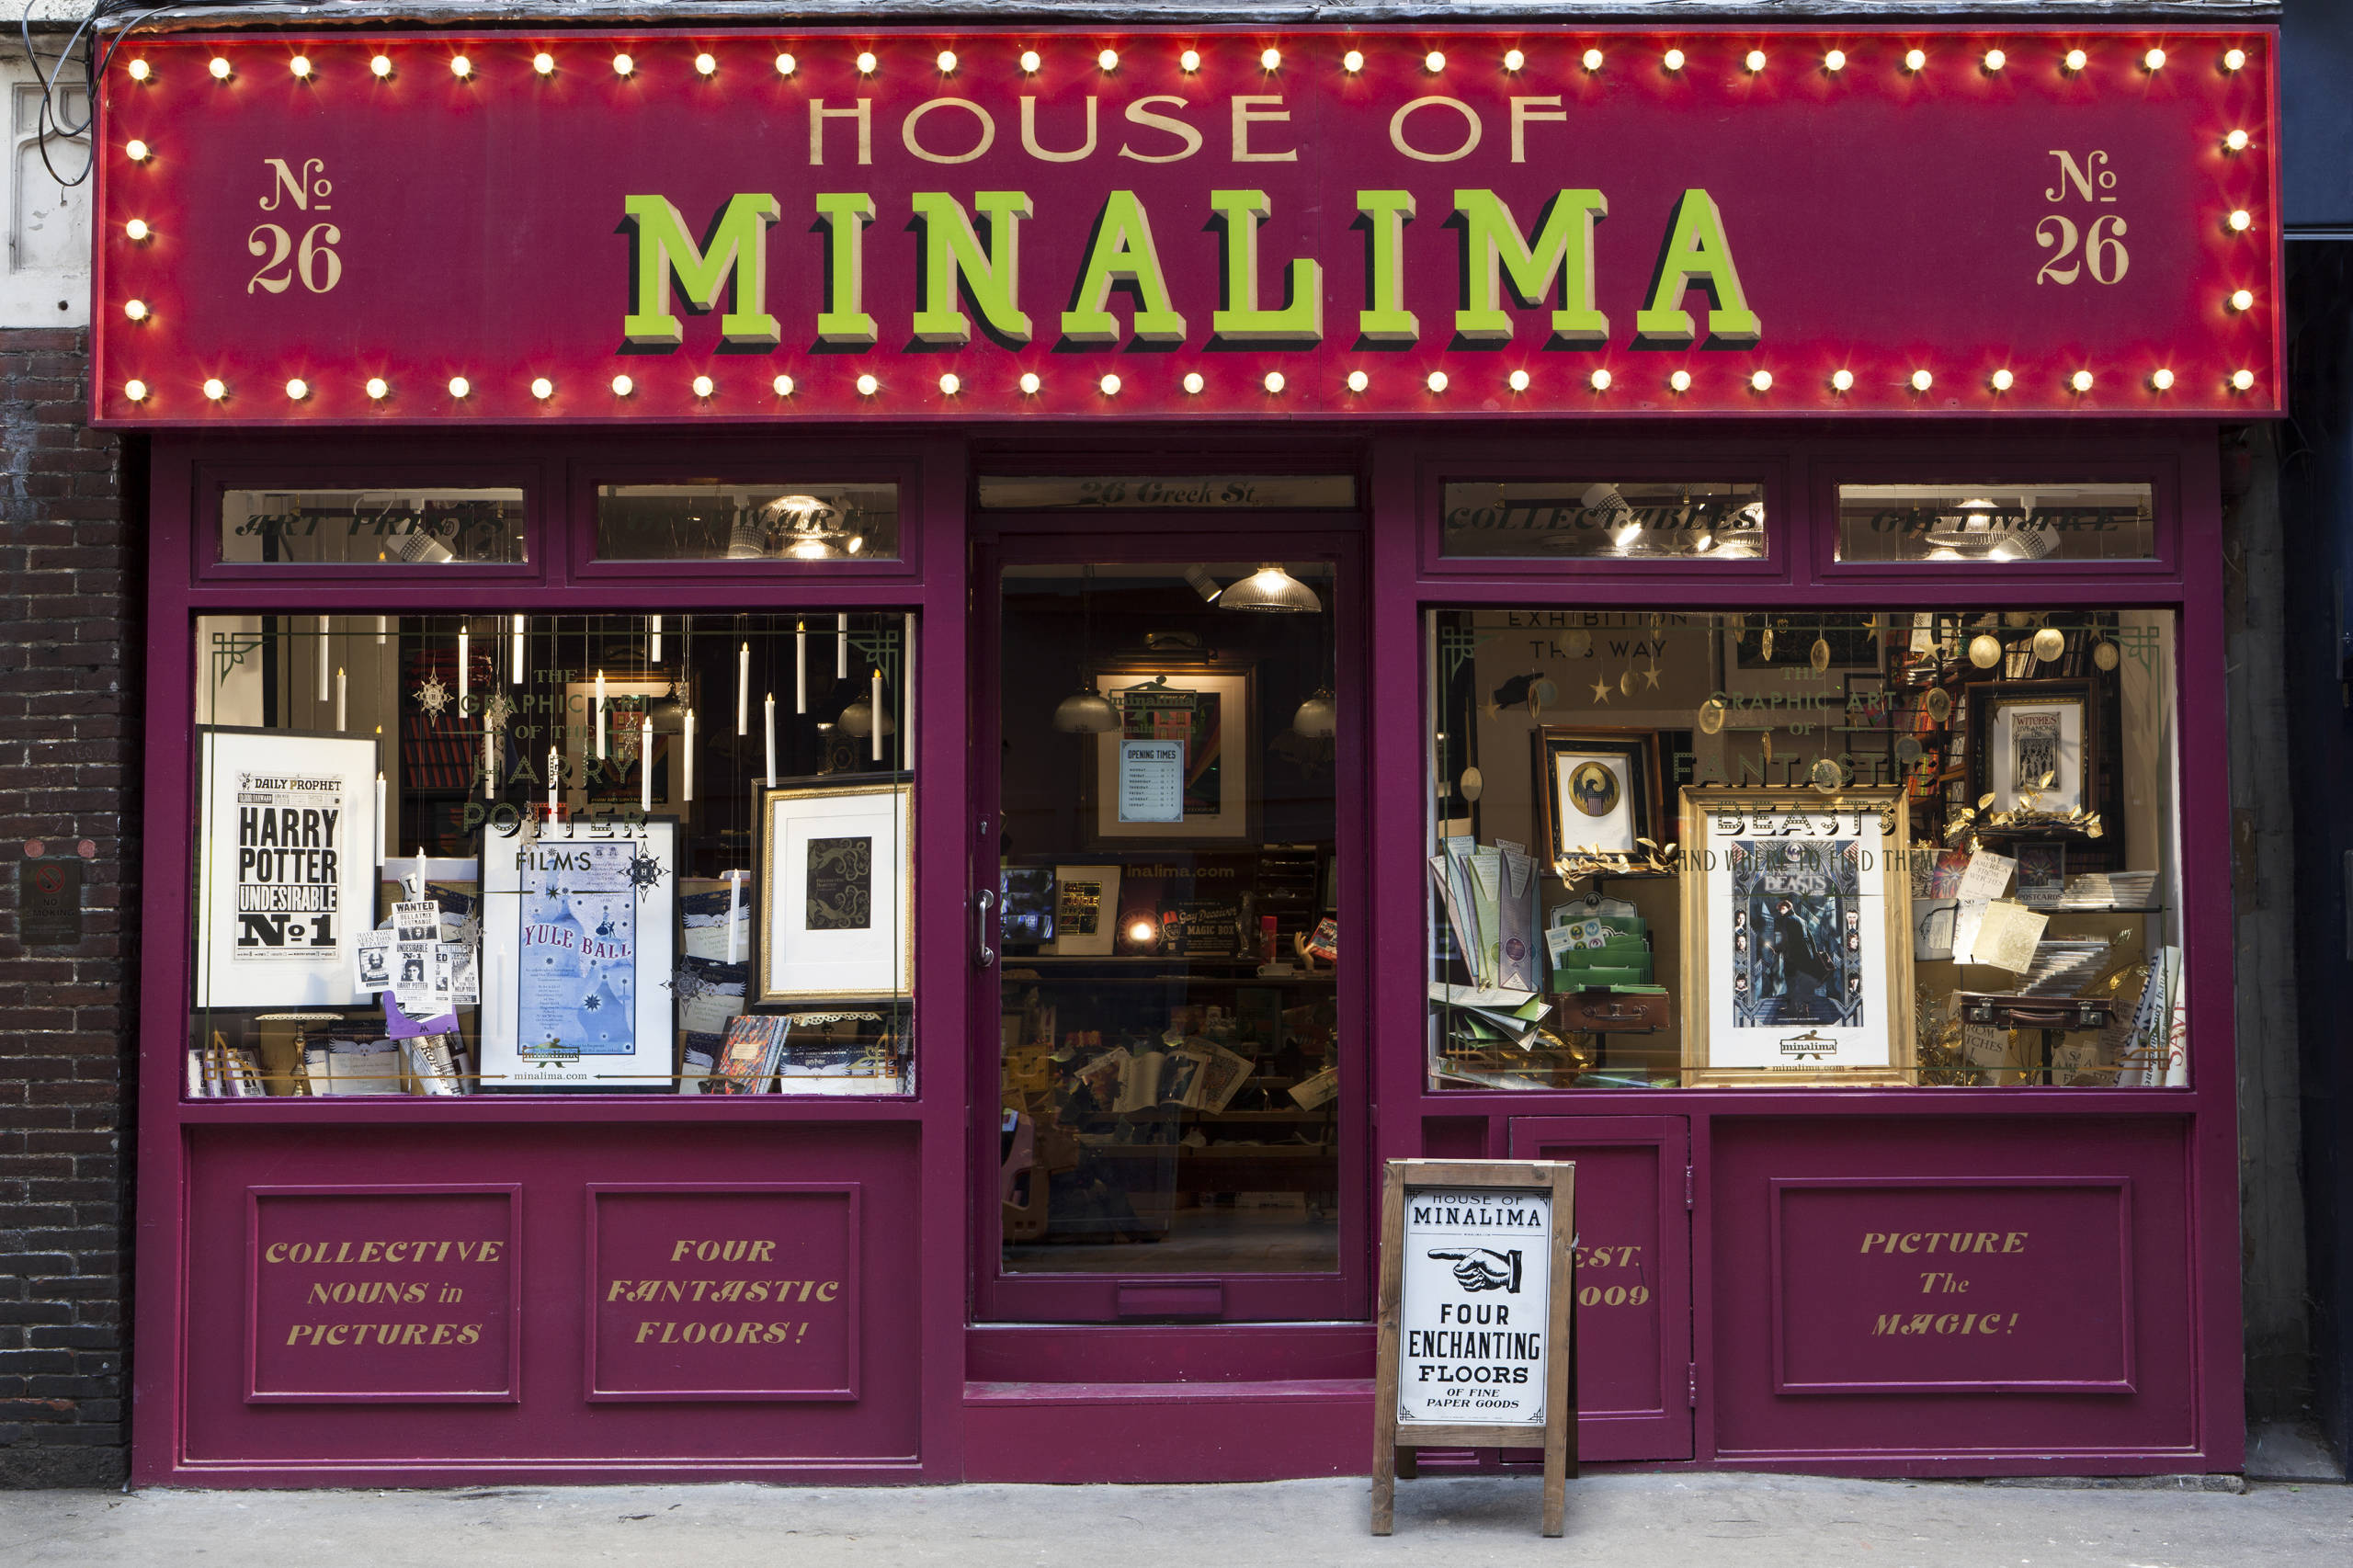 House of MinaLima, 26 Greek Street in London